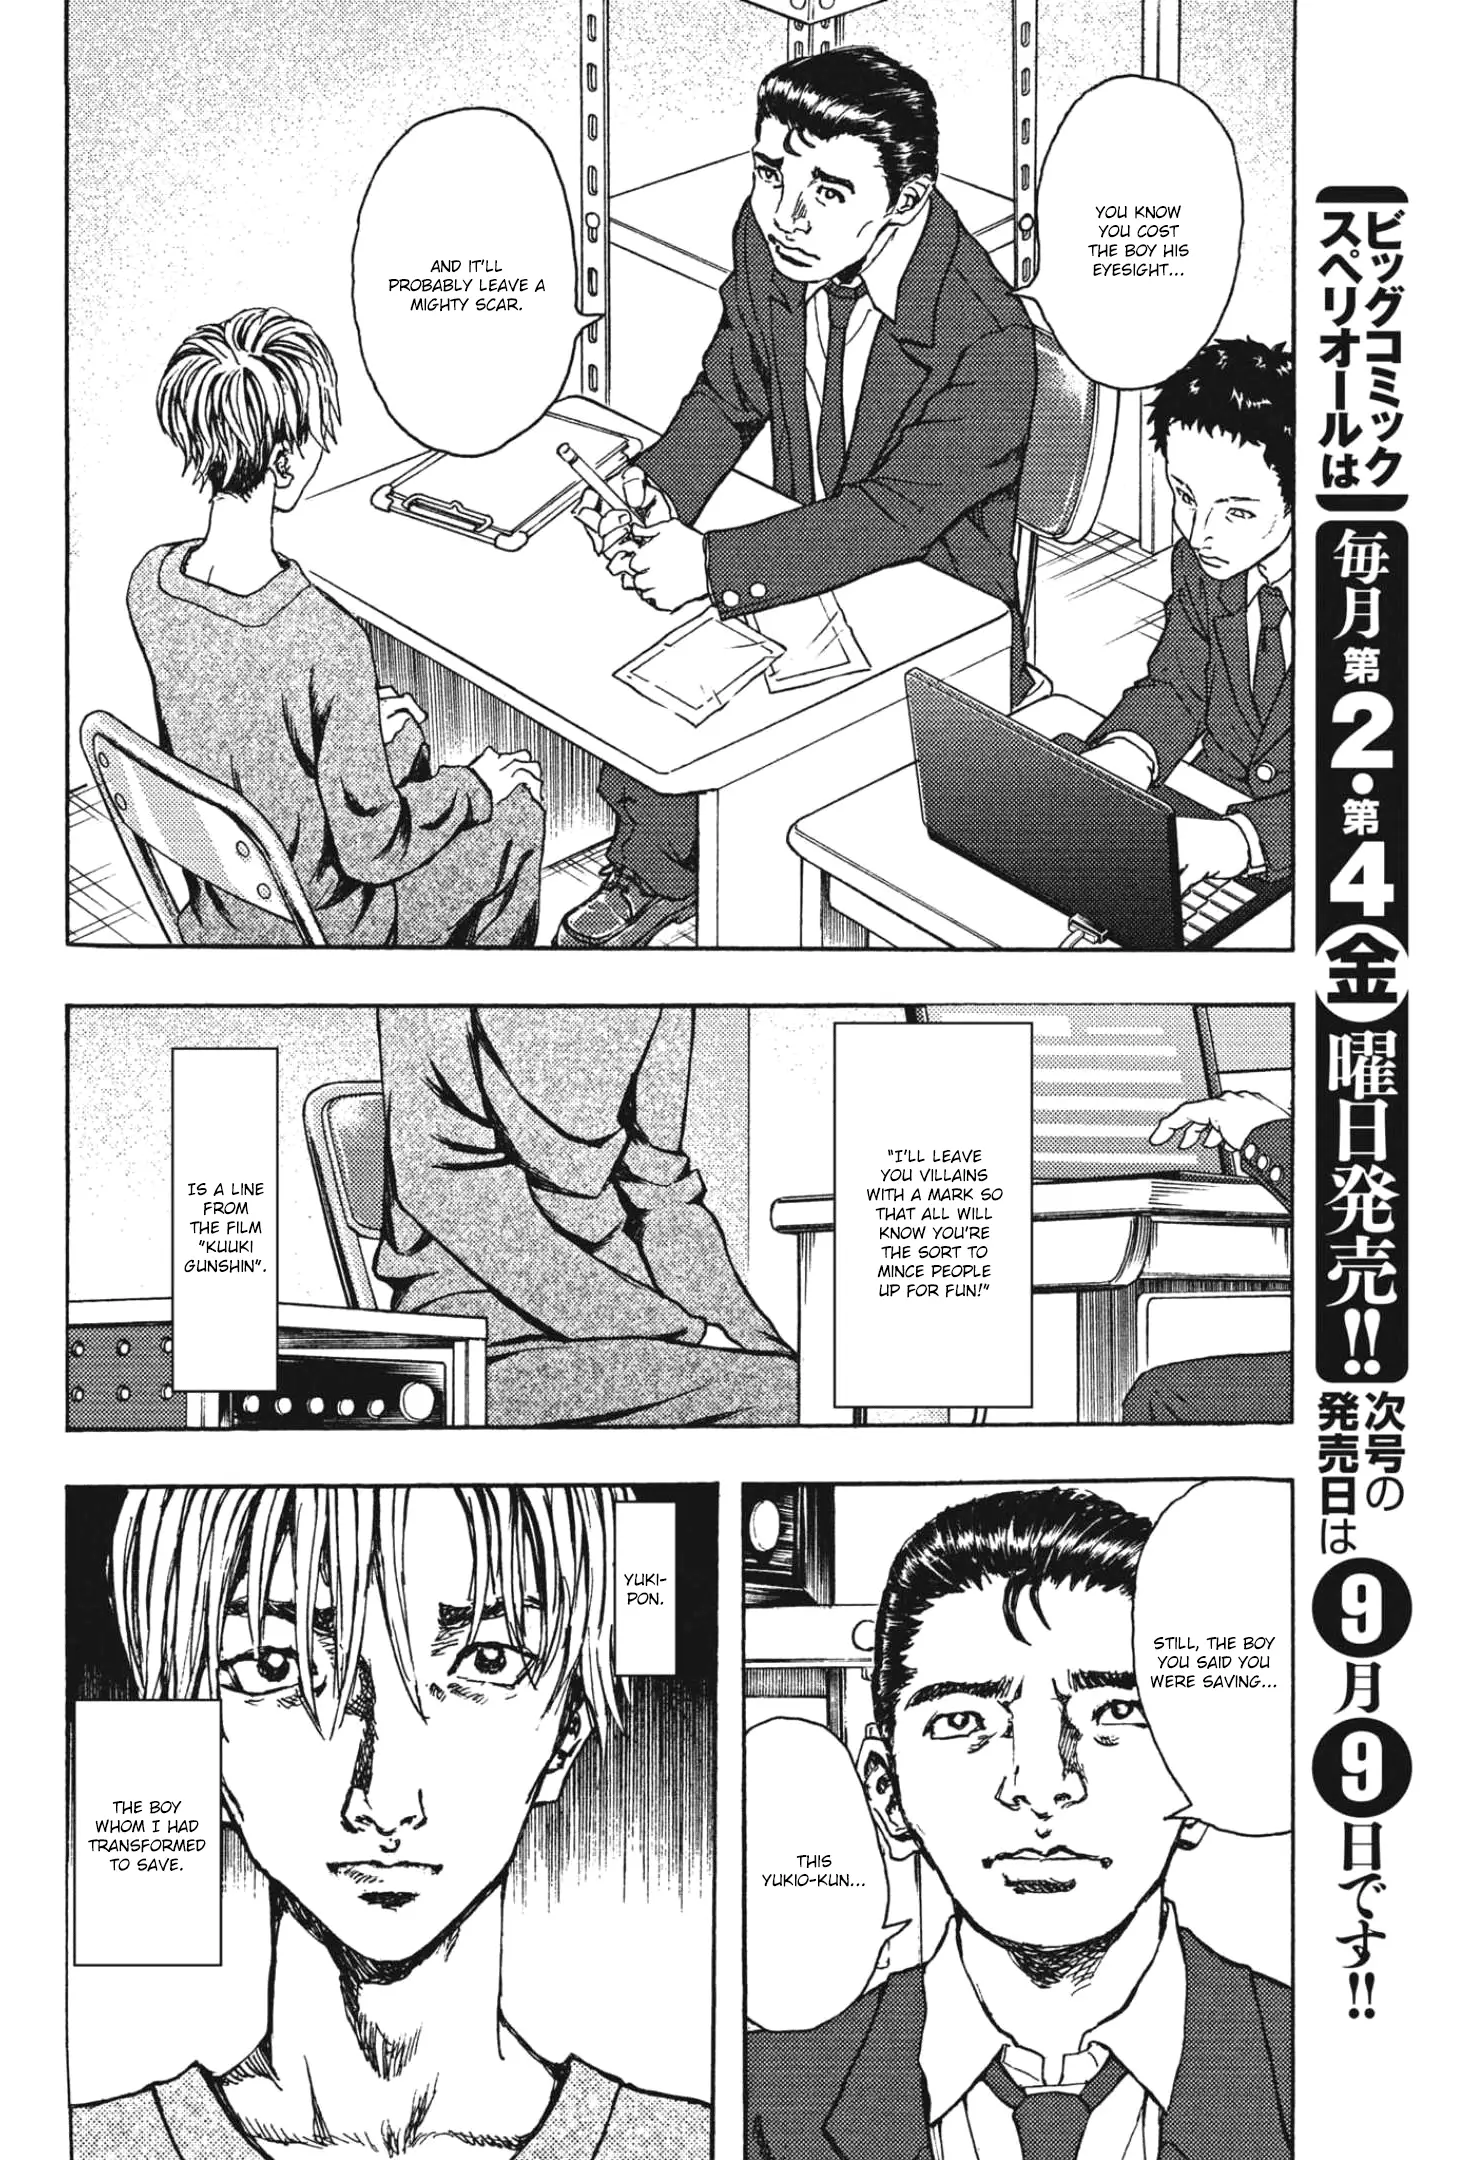 Gekikou Kamen - 15 page 10-141ac15c